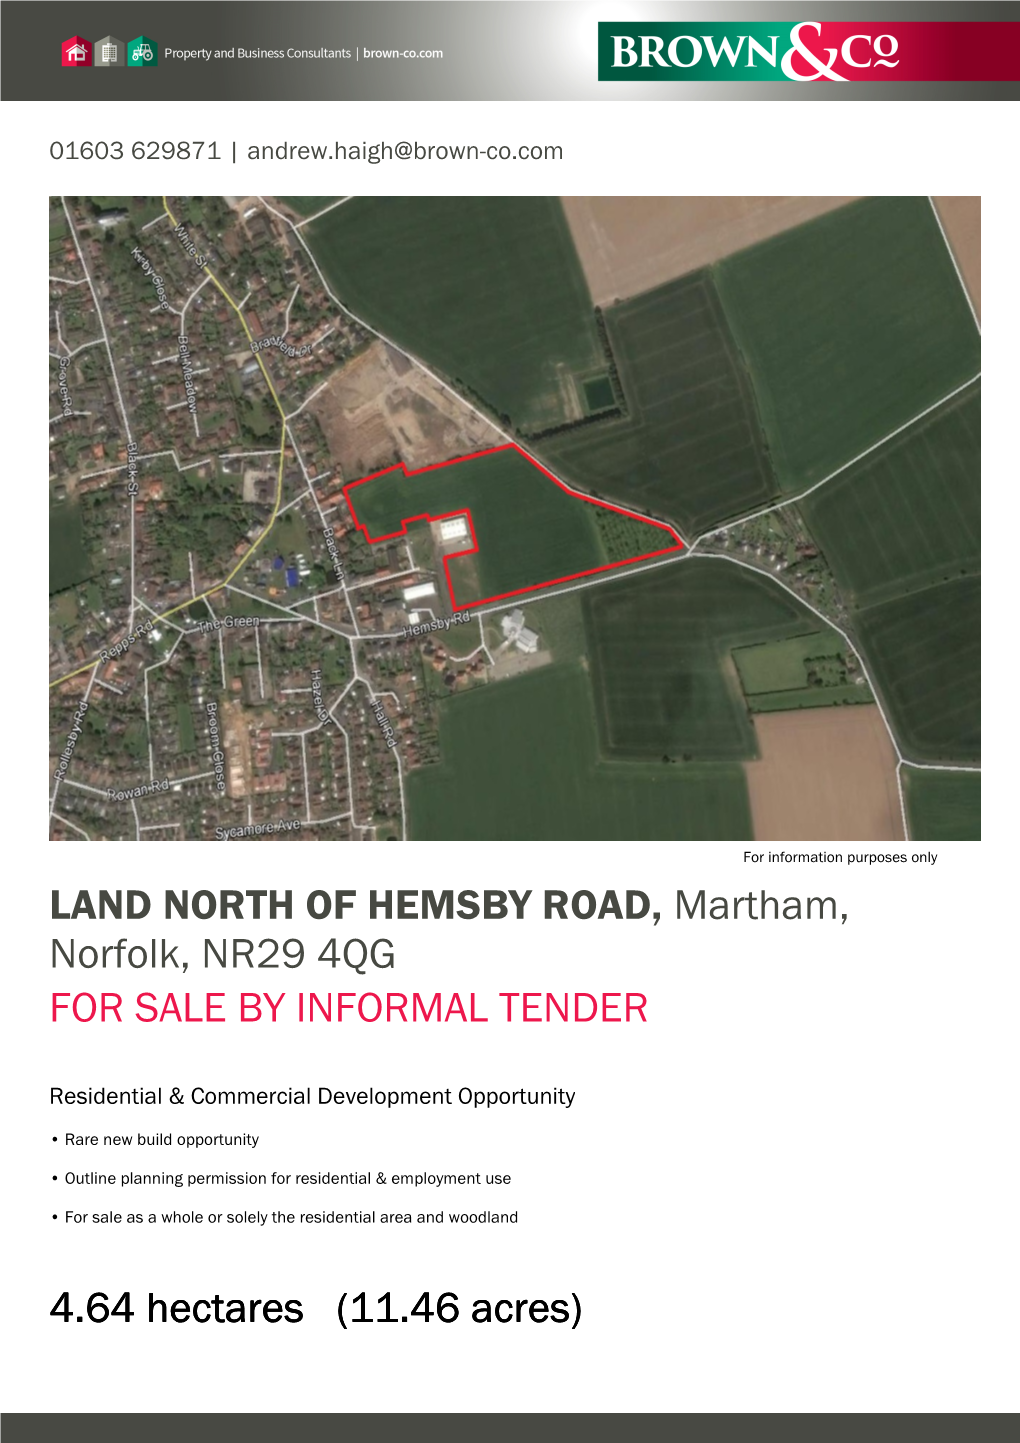 LAND NORTH of HEMSBY ROAD, Martham, Norfolk, NR29 4QG FOR